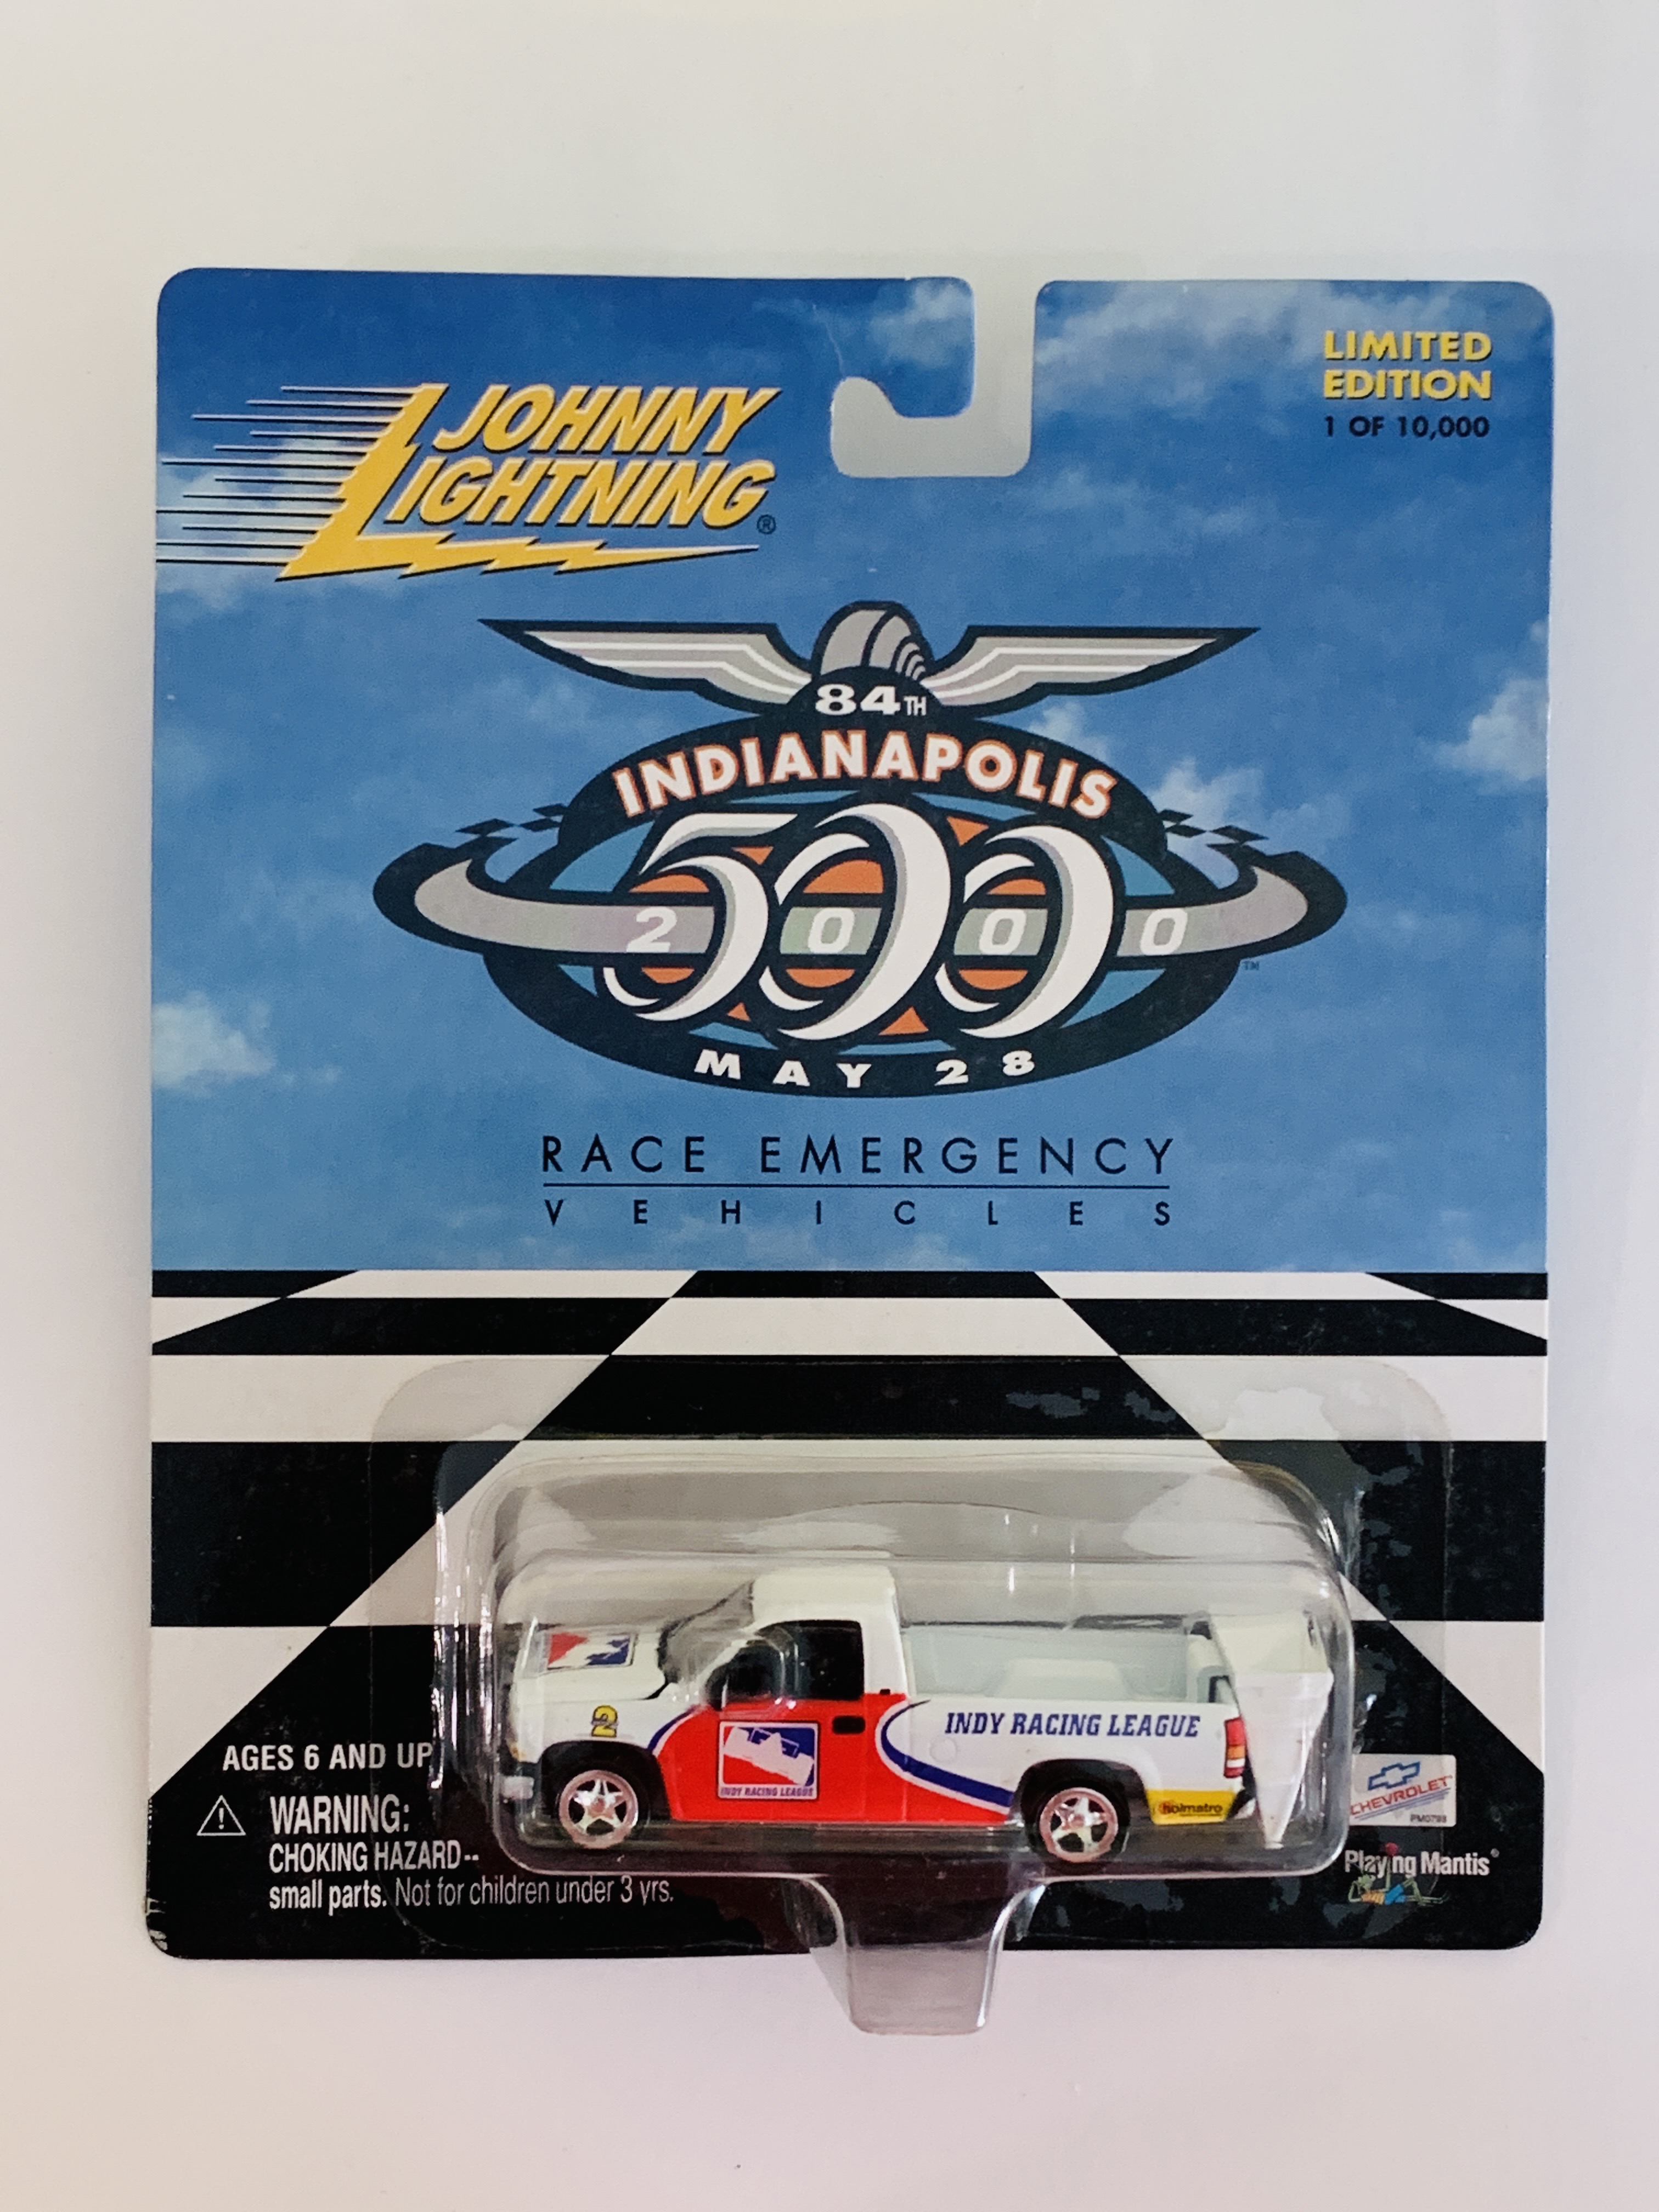 Johnny Lightning 84th Indy 500 Race Emergency Vehicle